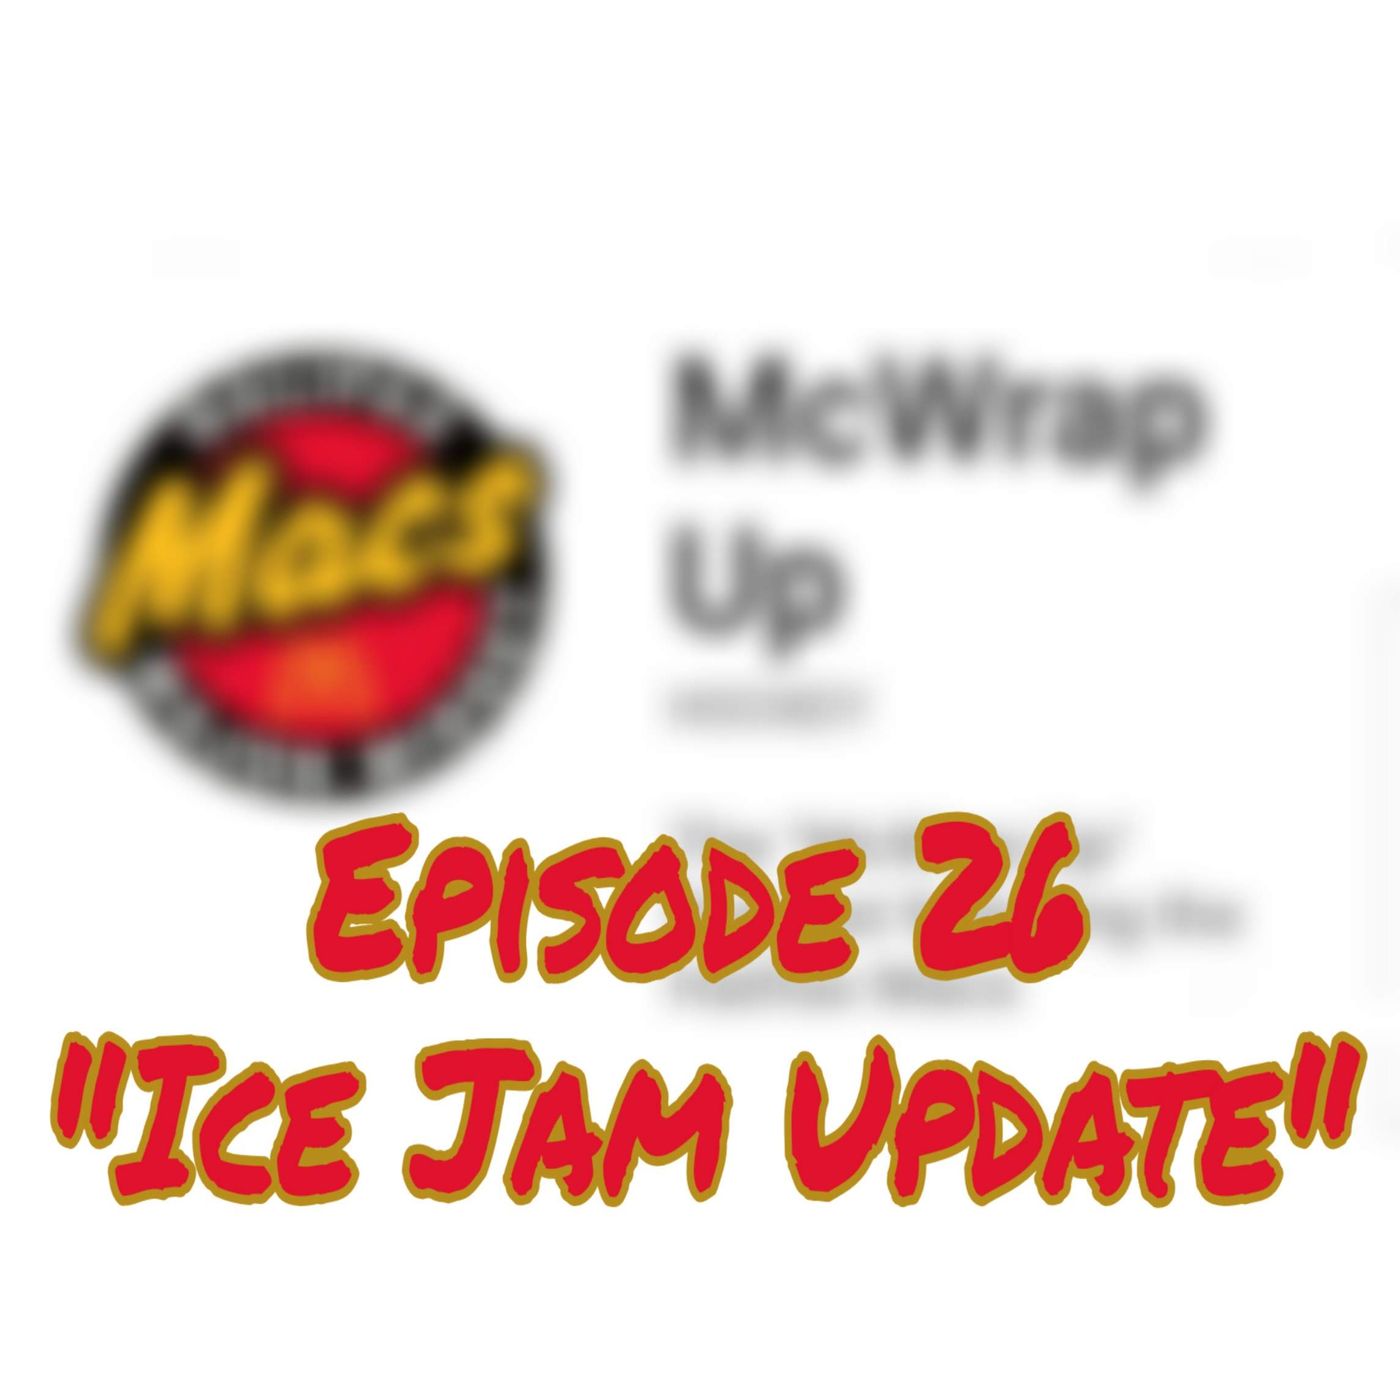 Ice Jam Update